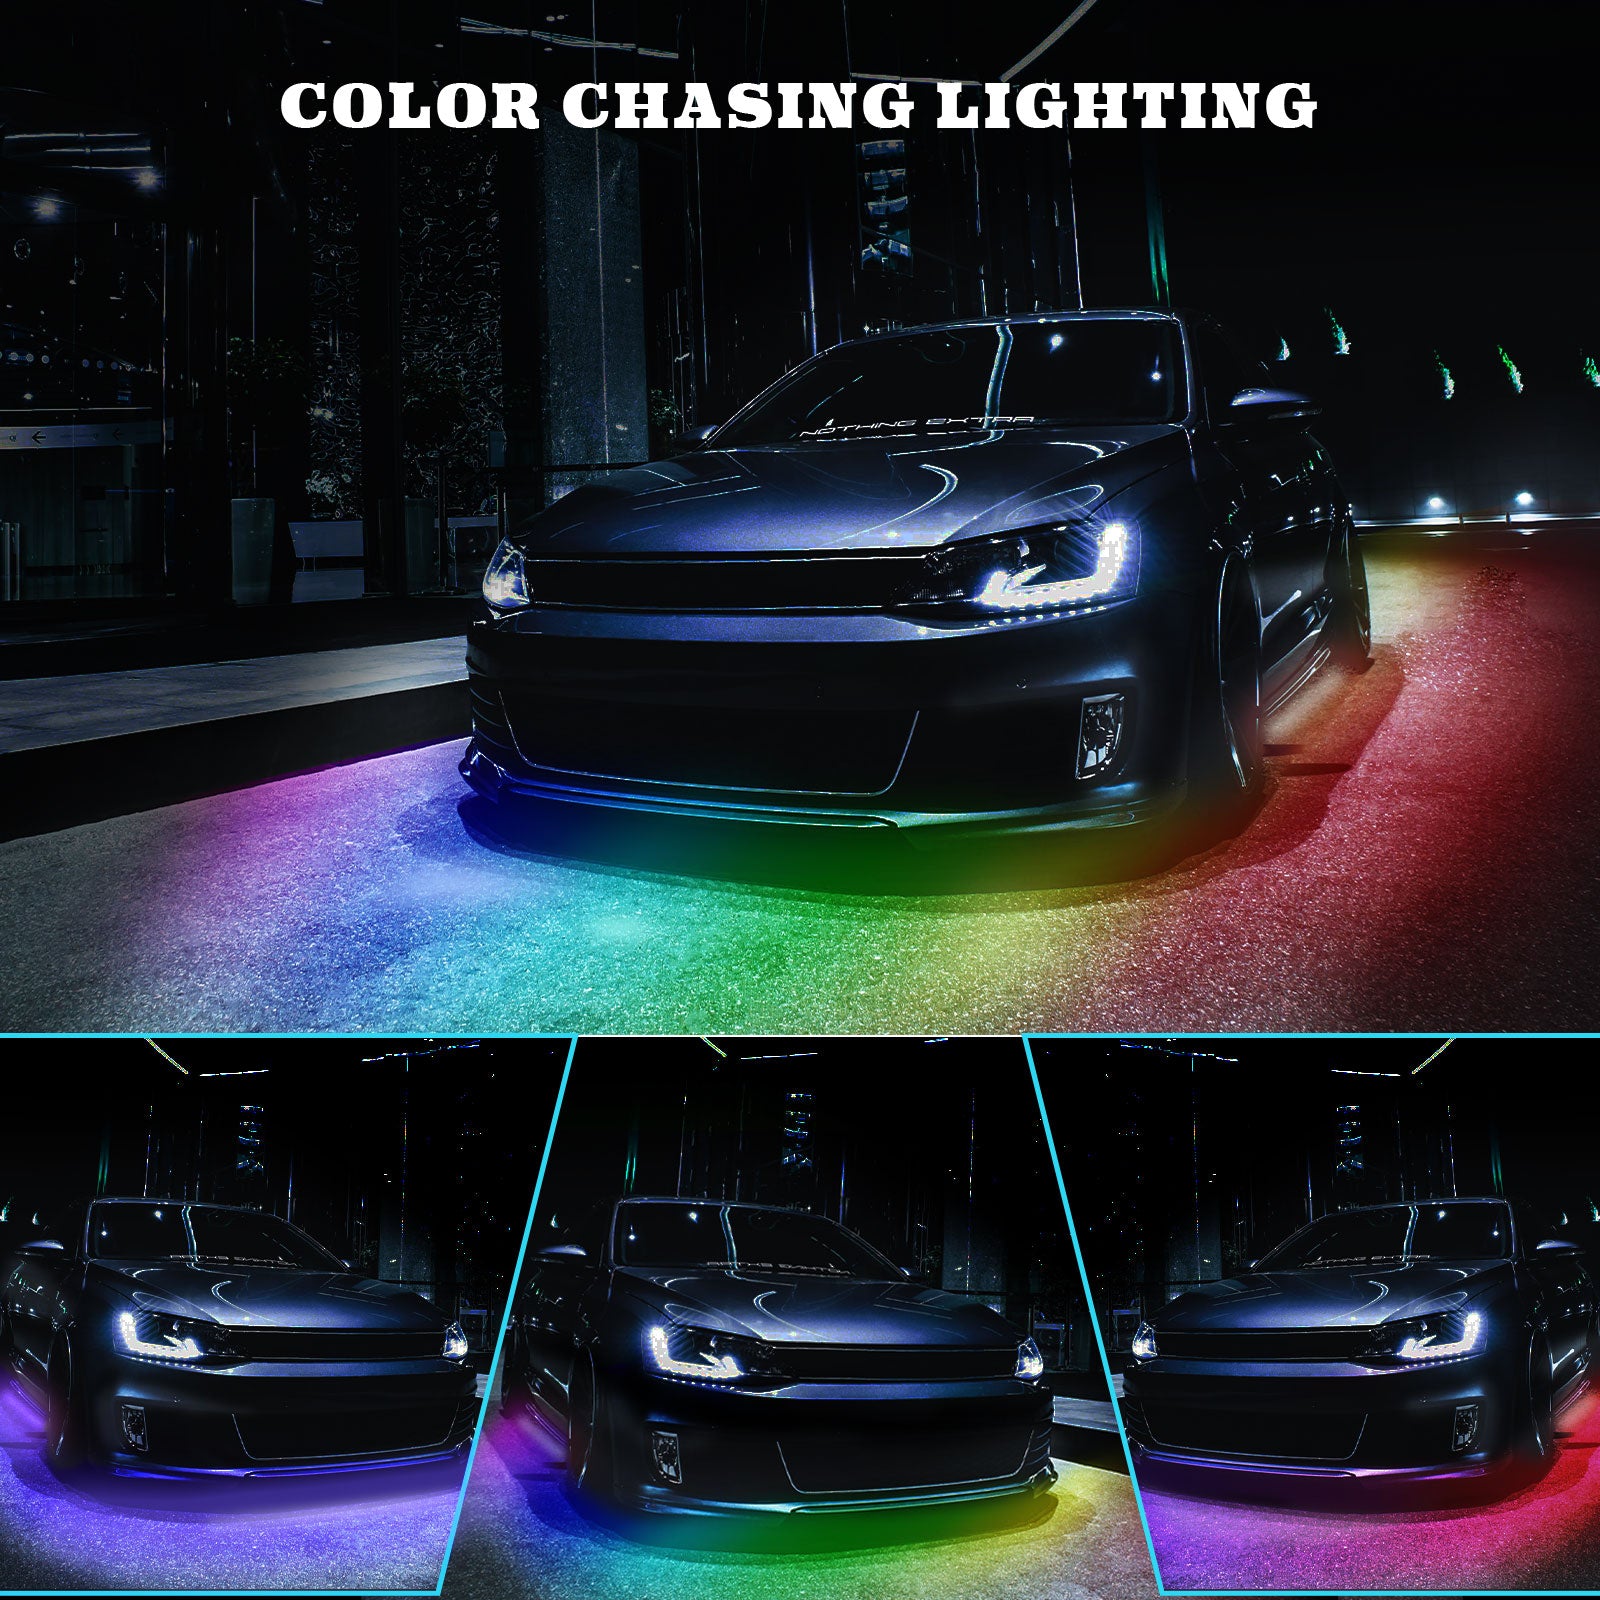 Premium Car UnderGlow Light Kit, UnderGlow Lights For Cars